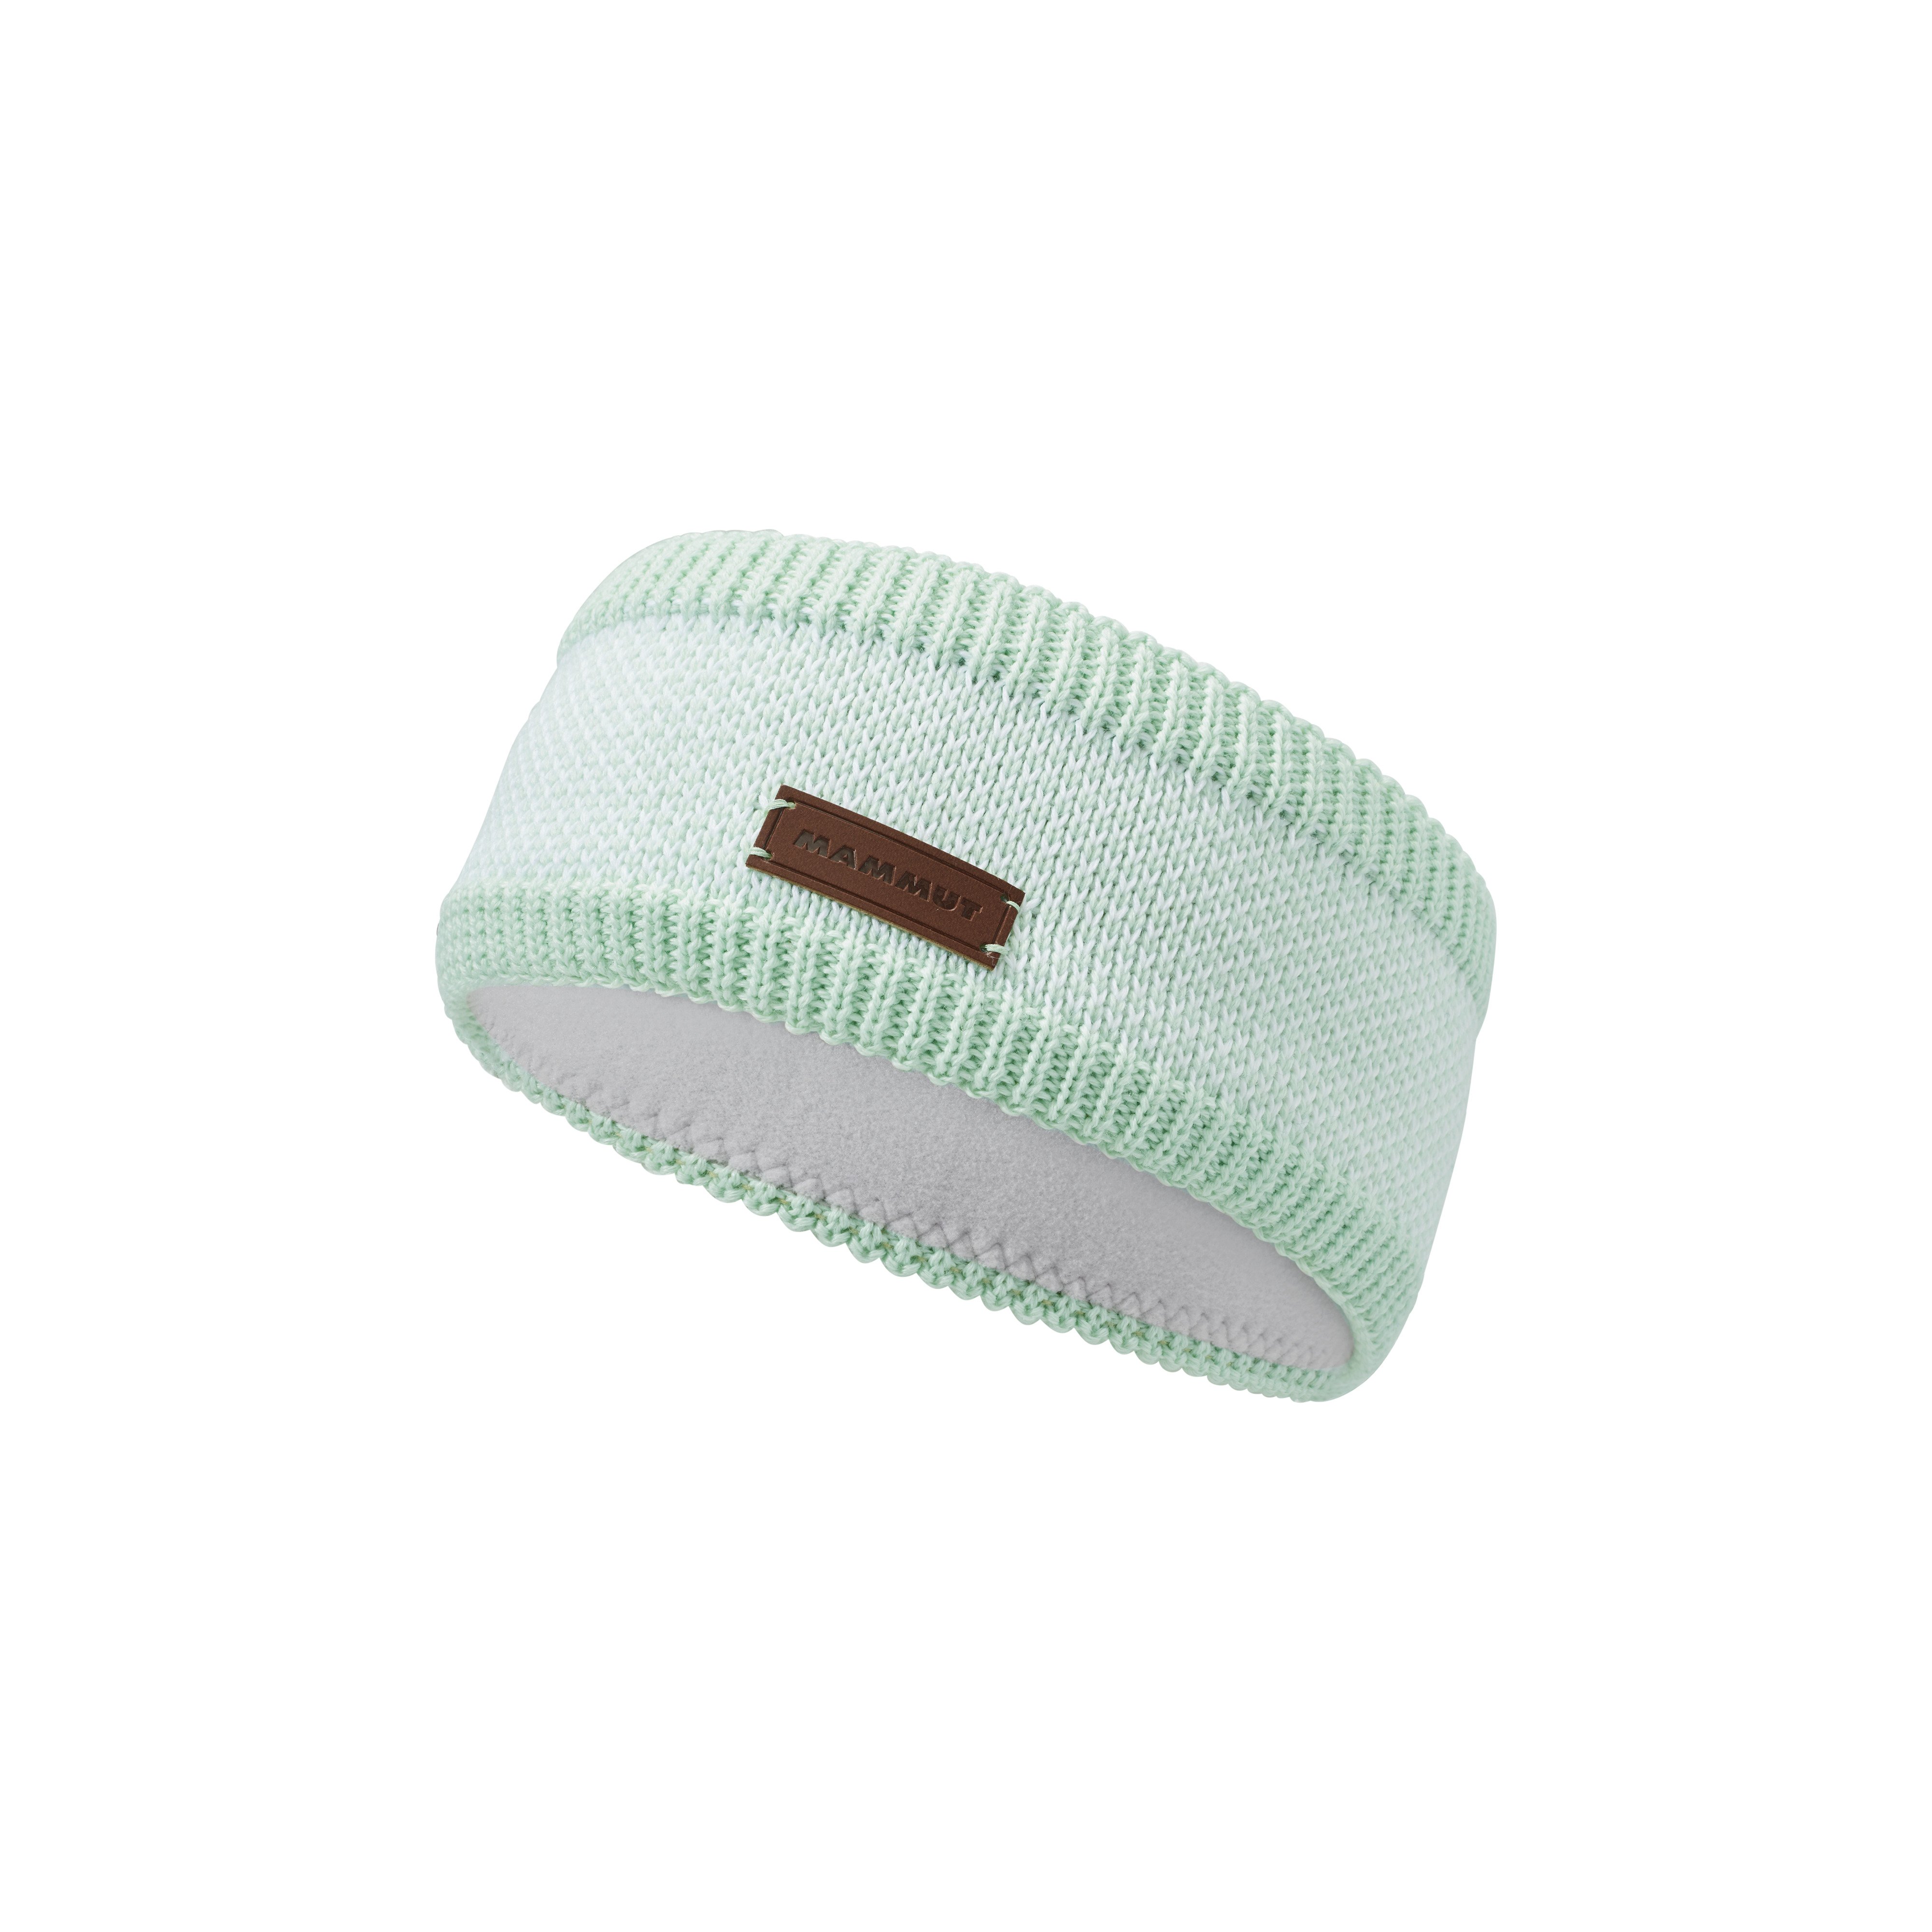 Snow Headband - neo mint-white, one size product image